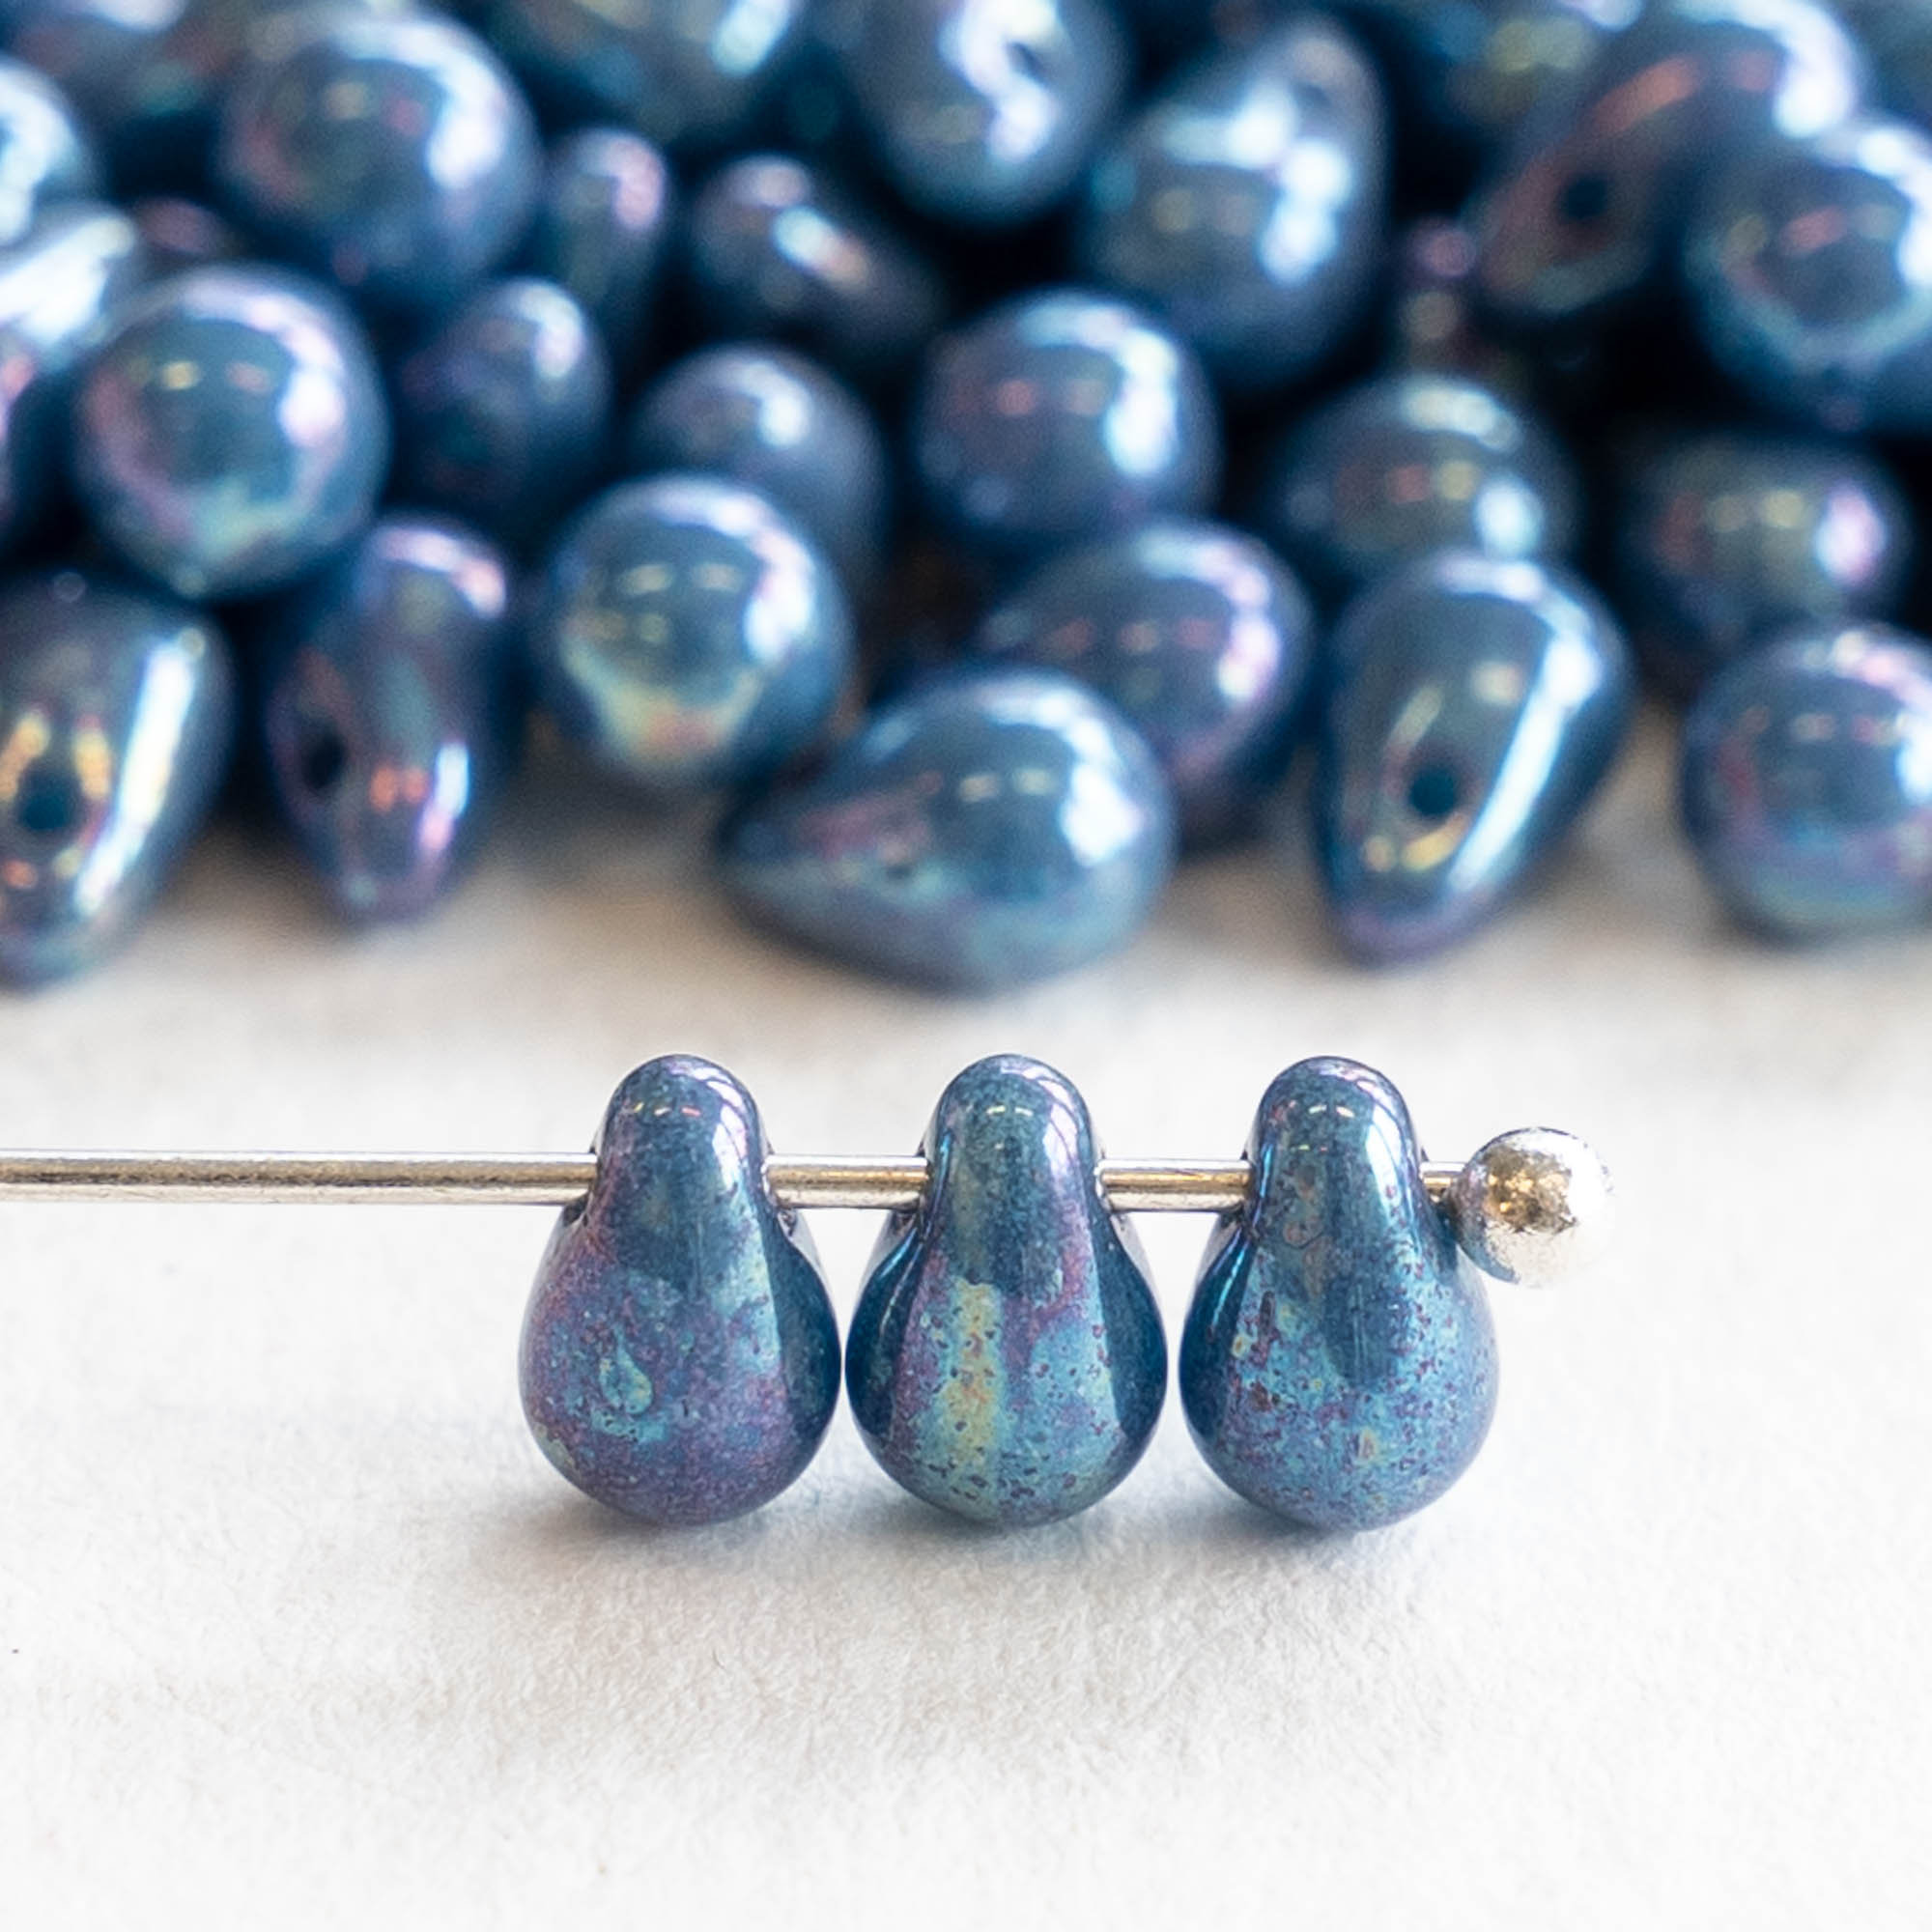 4x6mm Teardrop Beads Czech Glass Beads Smooth Teardrop 6x4mm Purple Blue  Luster 100 Beads 